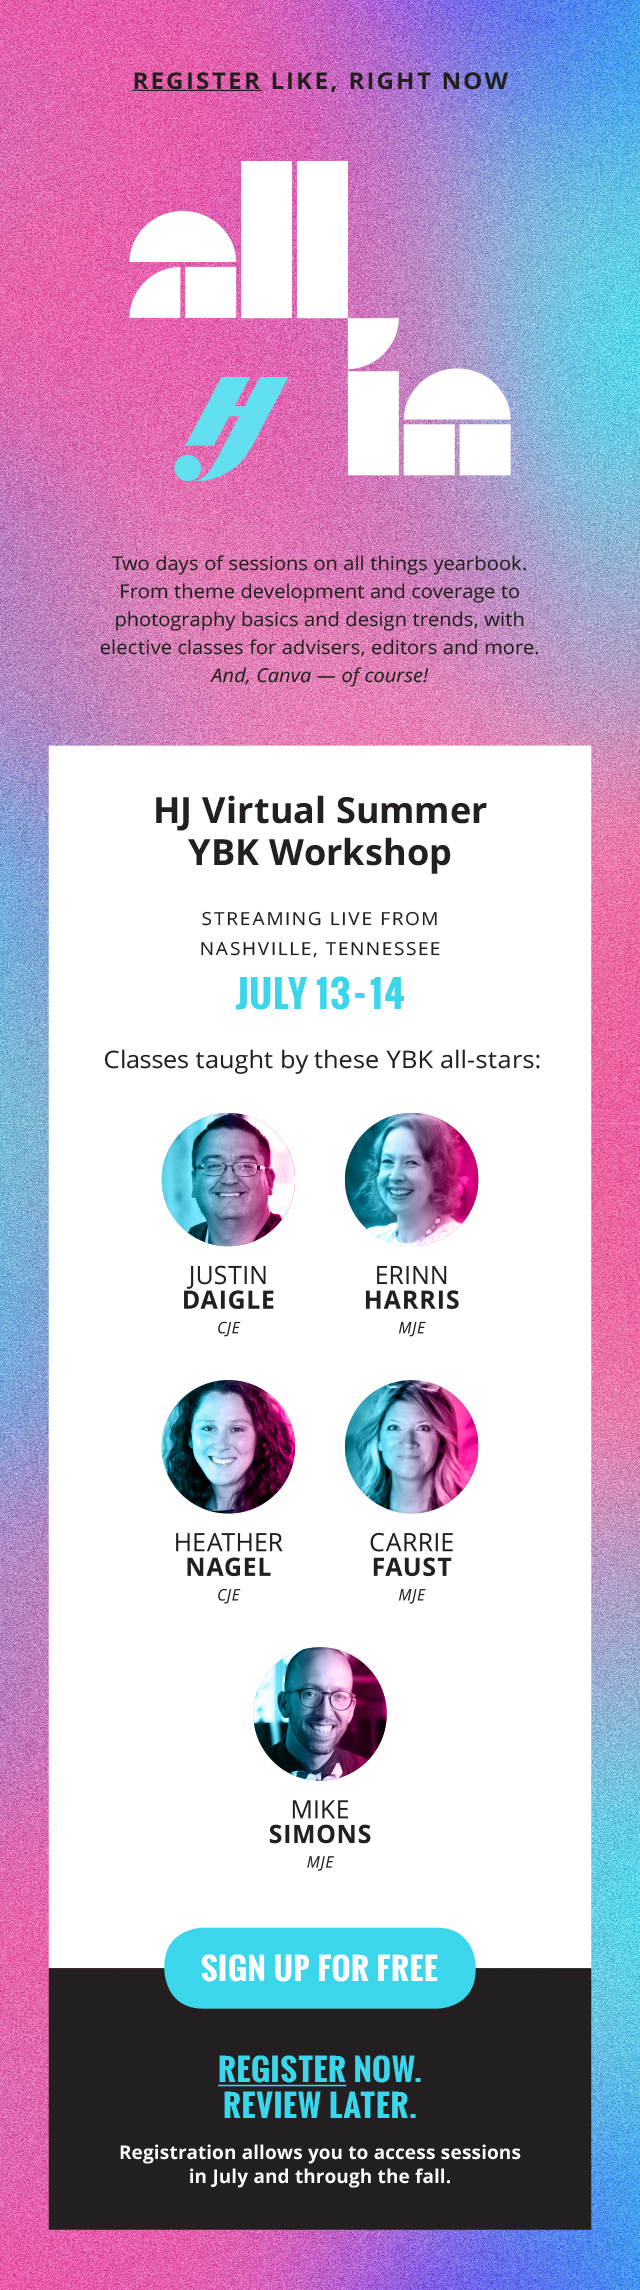 HJ Virtual Summer YBK Workshop